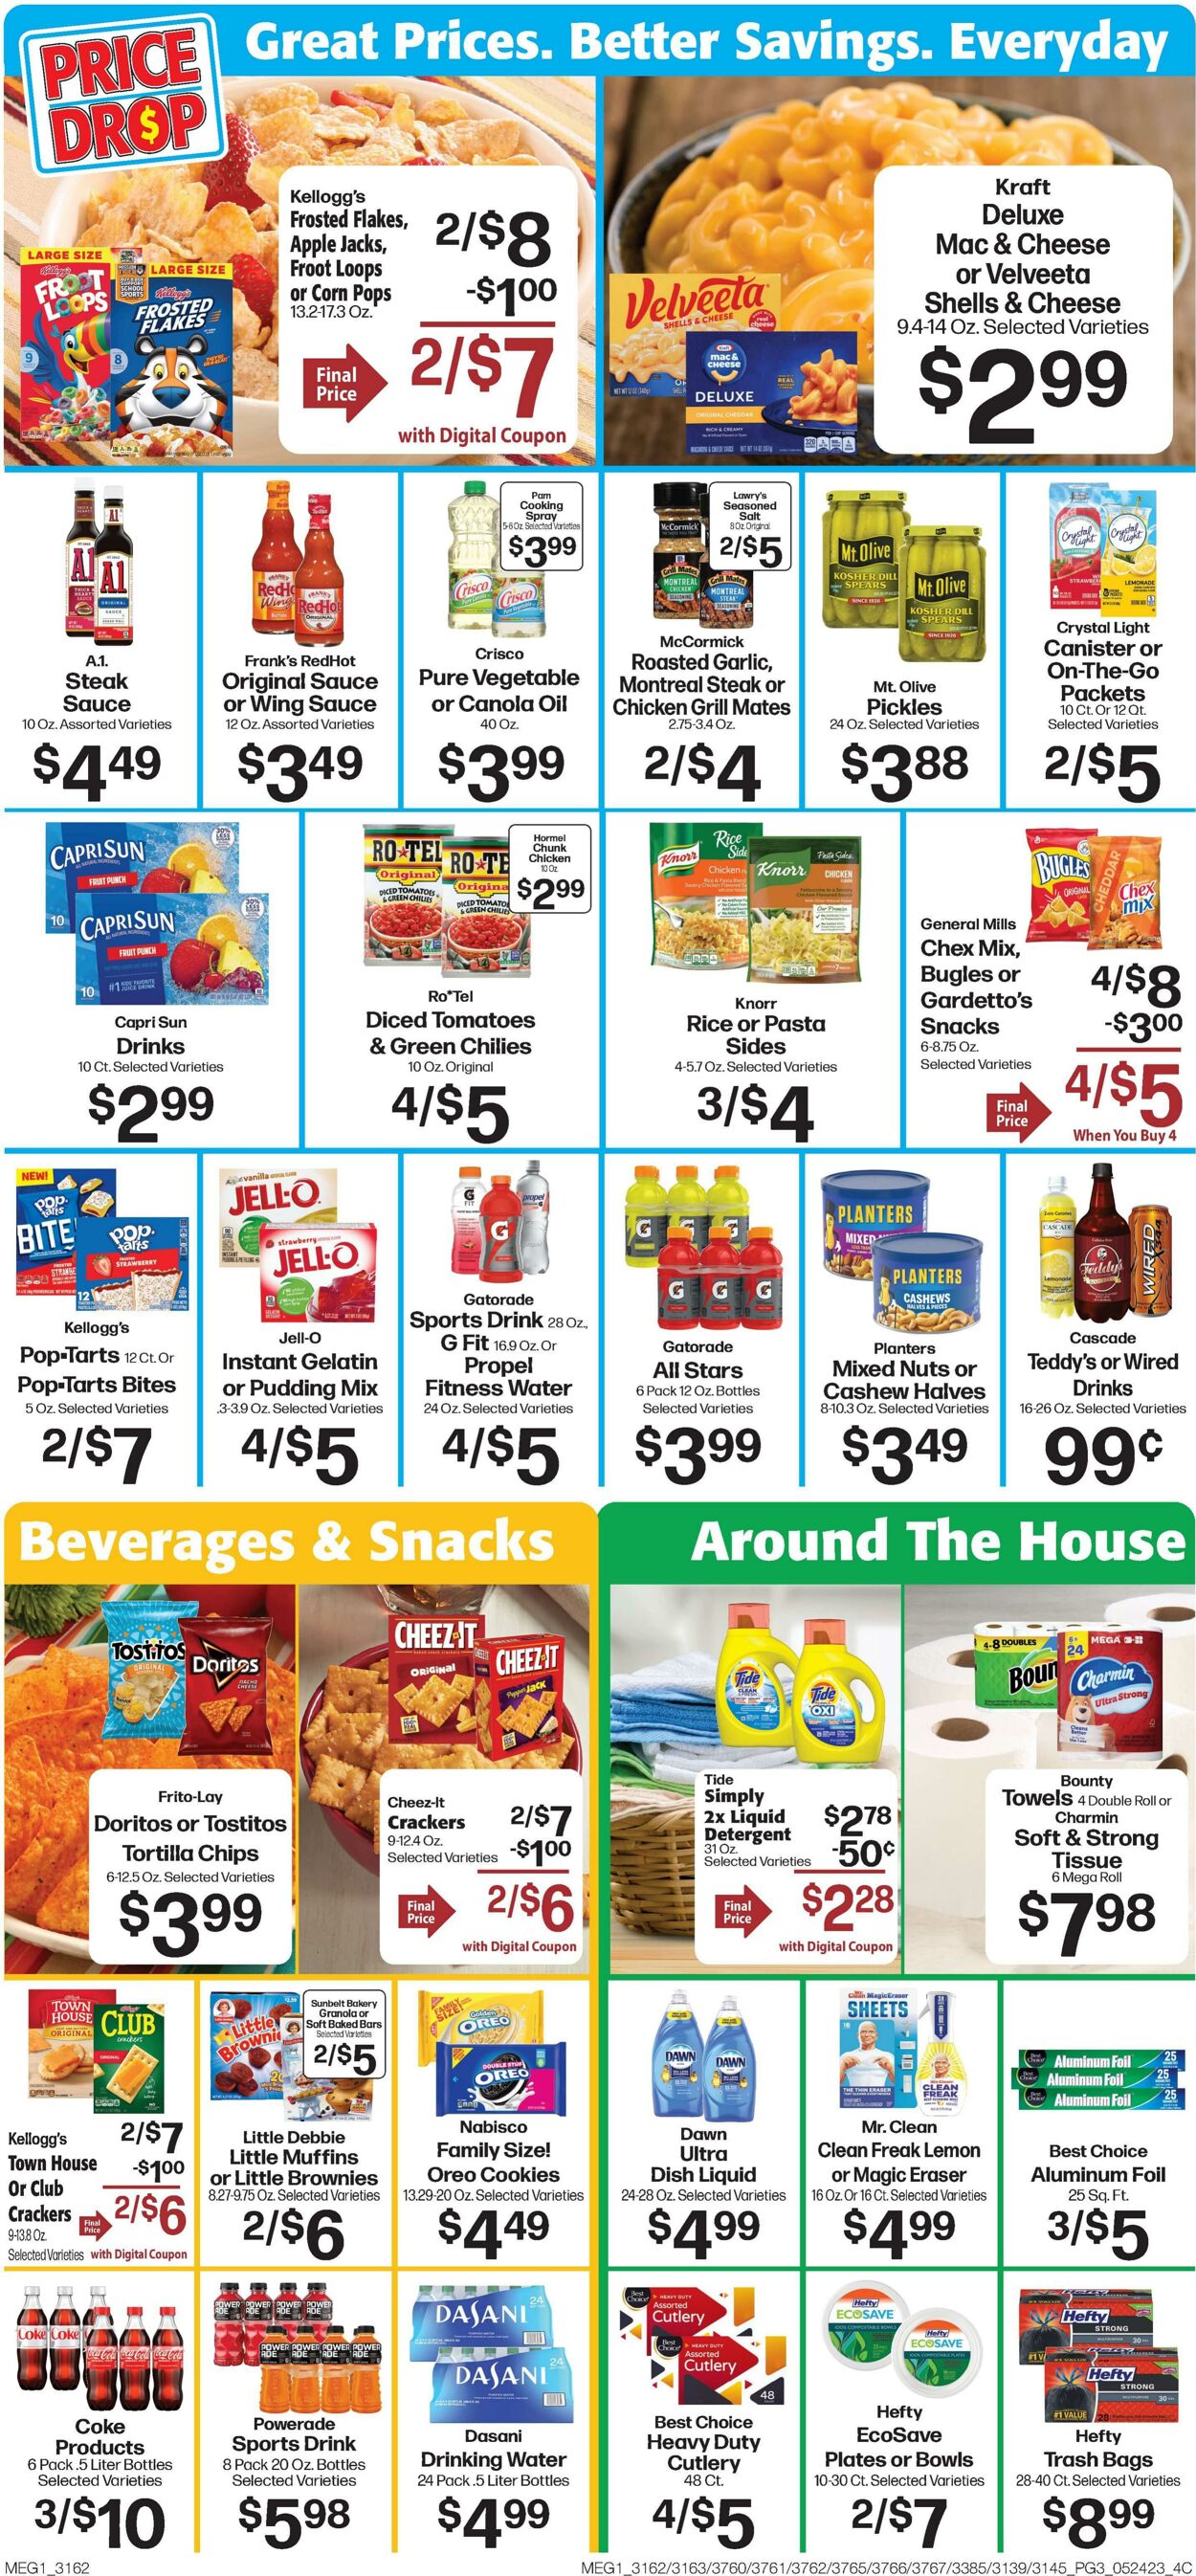 Weekly ad Hays Supermarkets 05/24/2023 - 05/30/2023